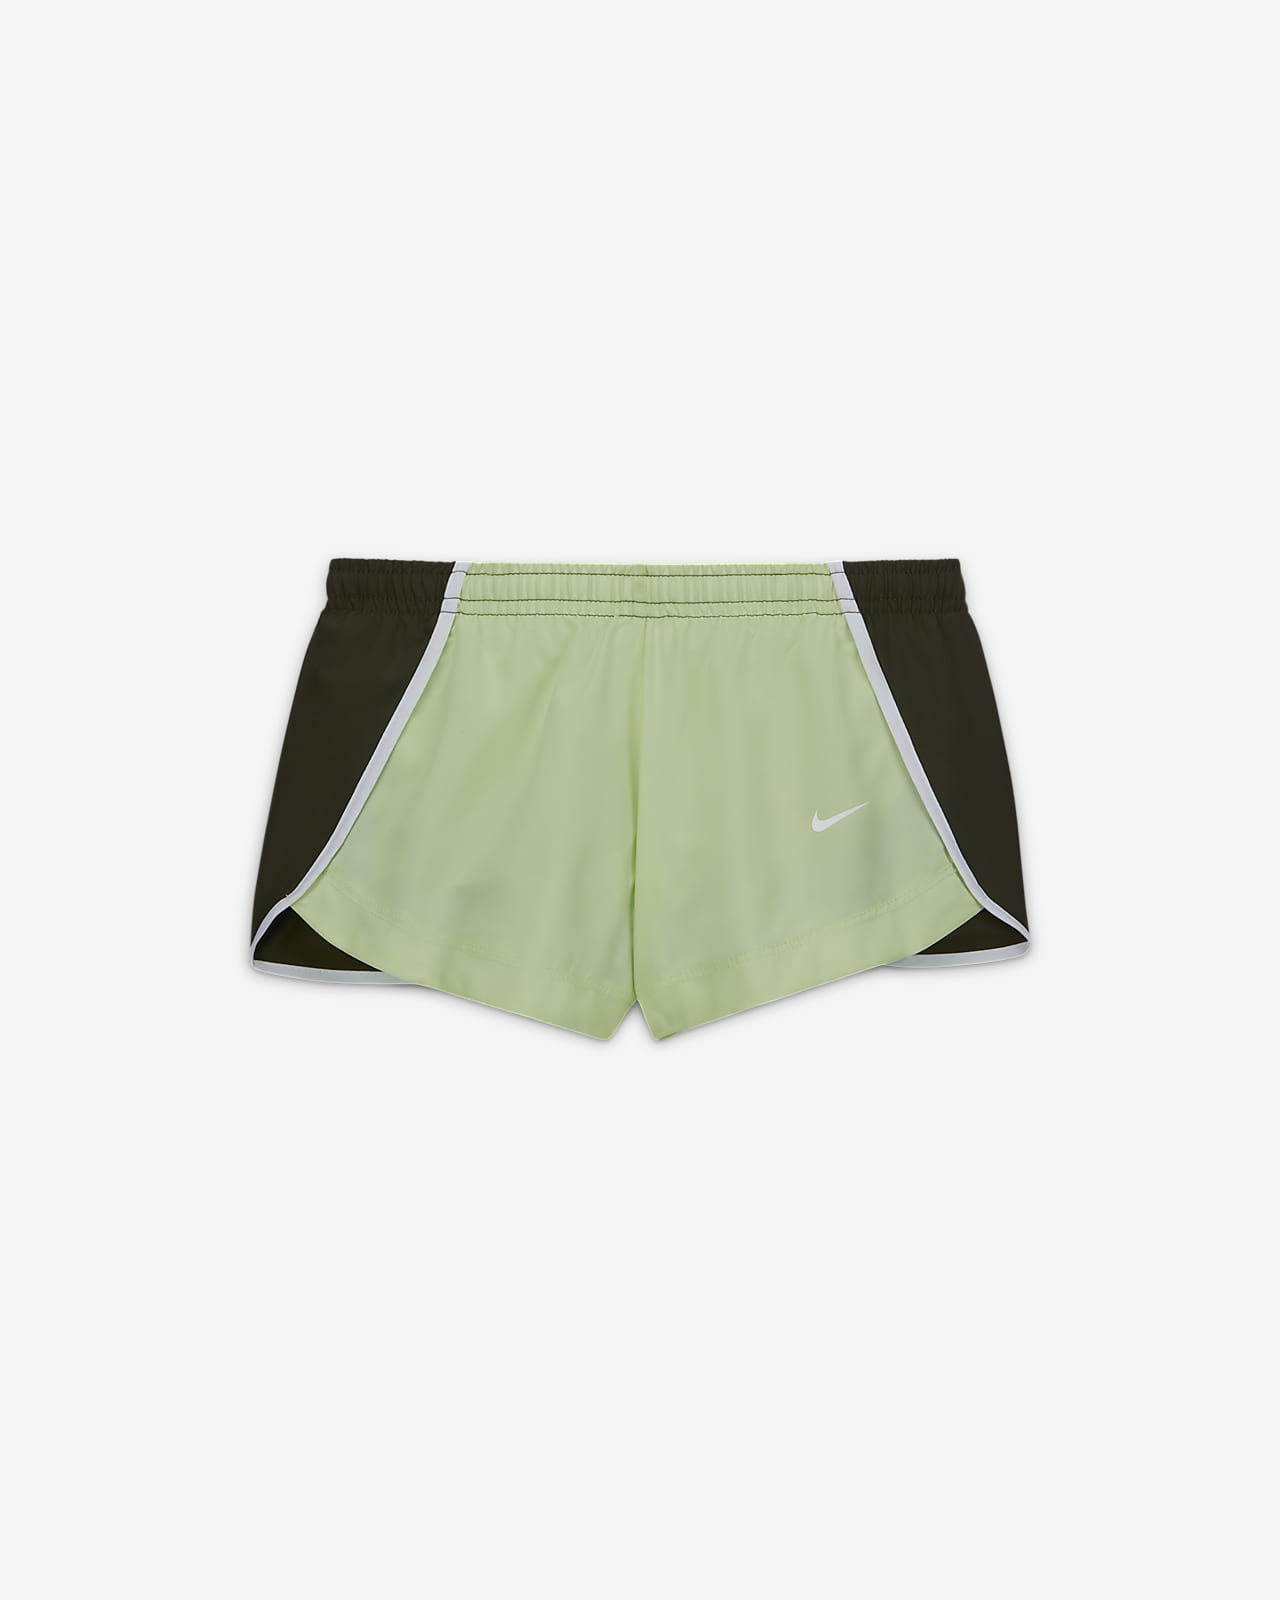 nike youth running shorts